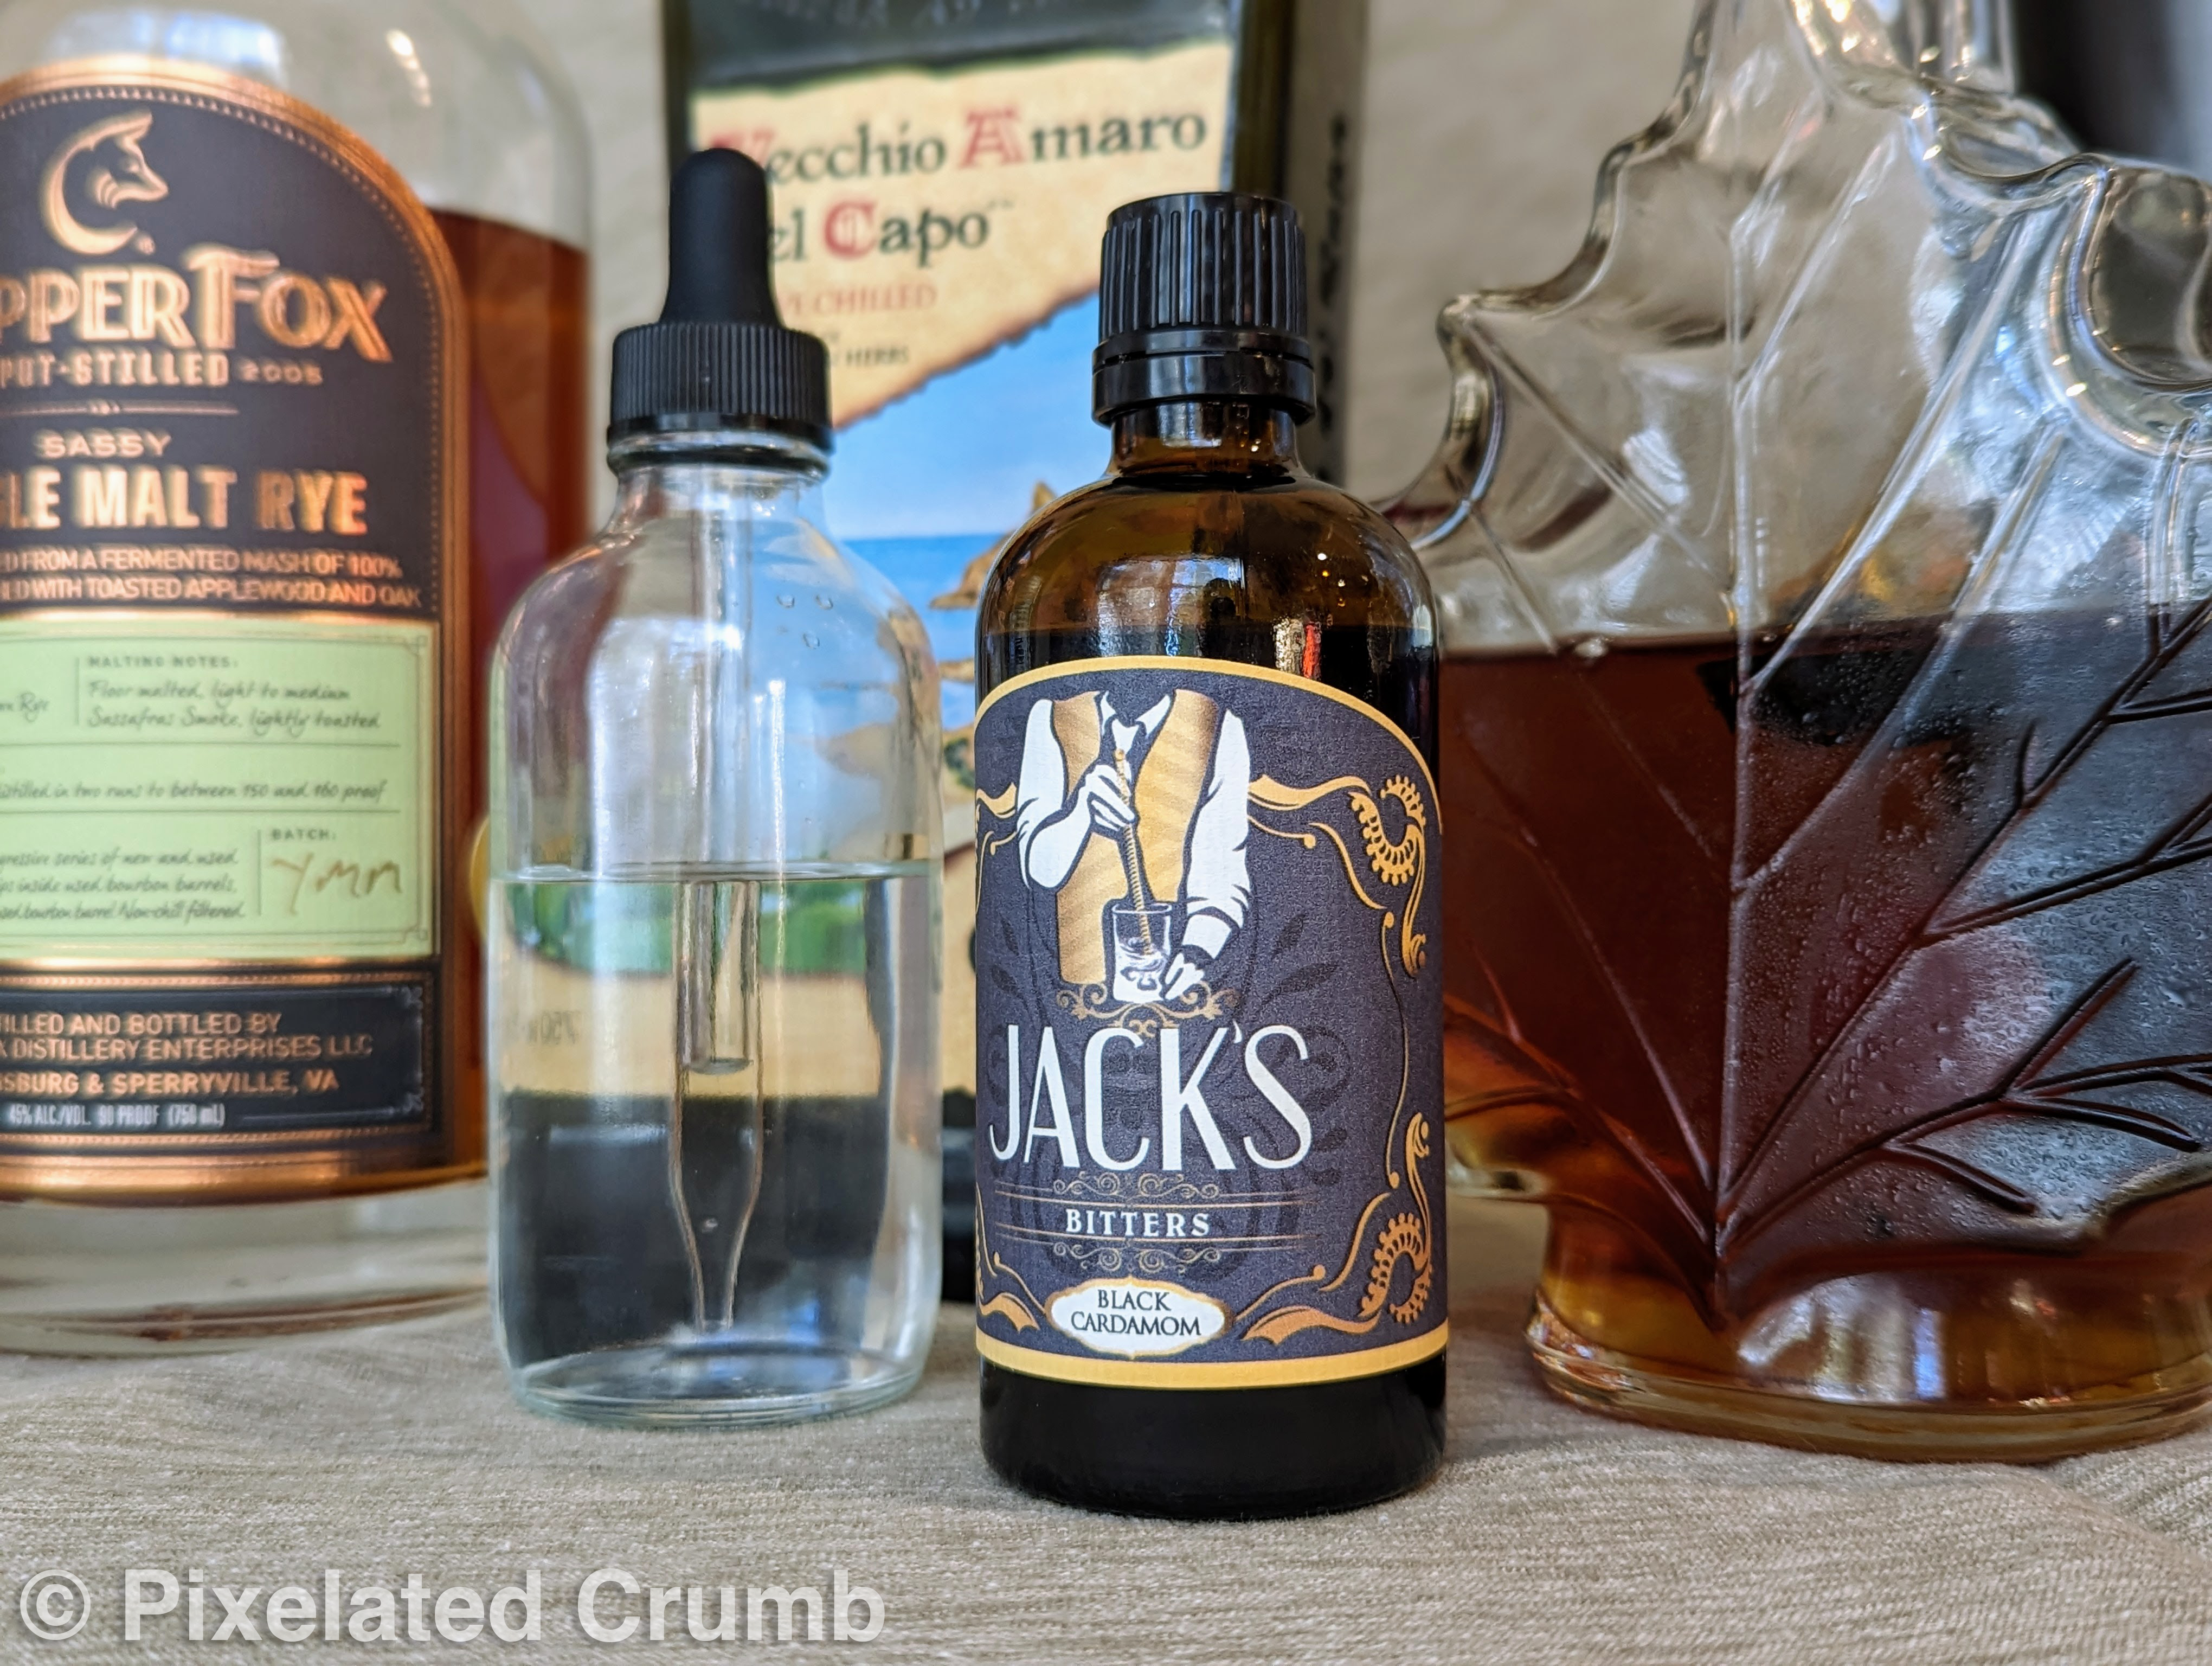 Bottles of jack's black cardamom bitters, salt water, maple syrup, rye, and amaro 